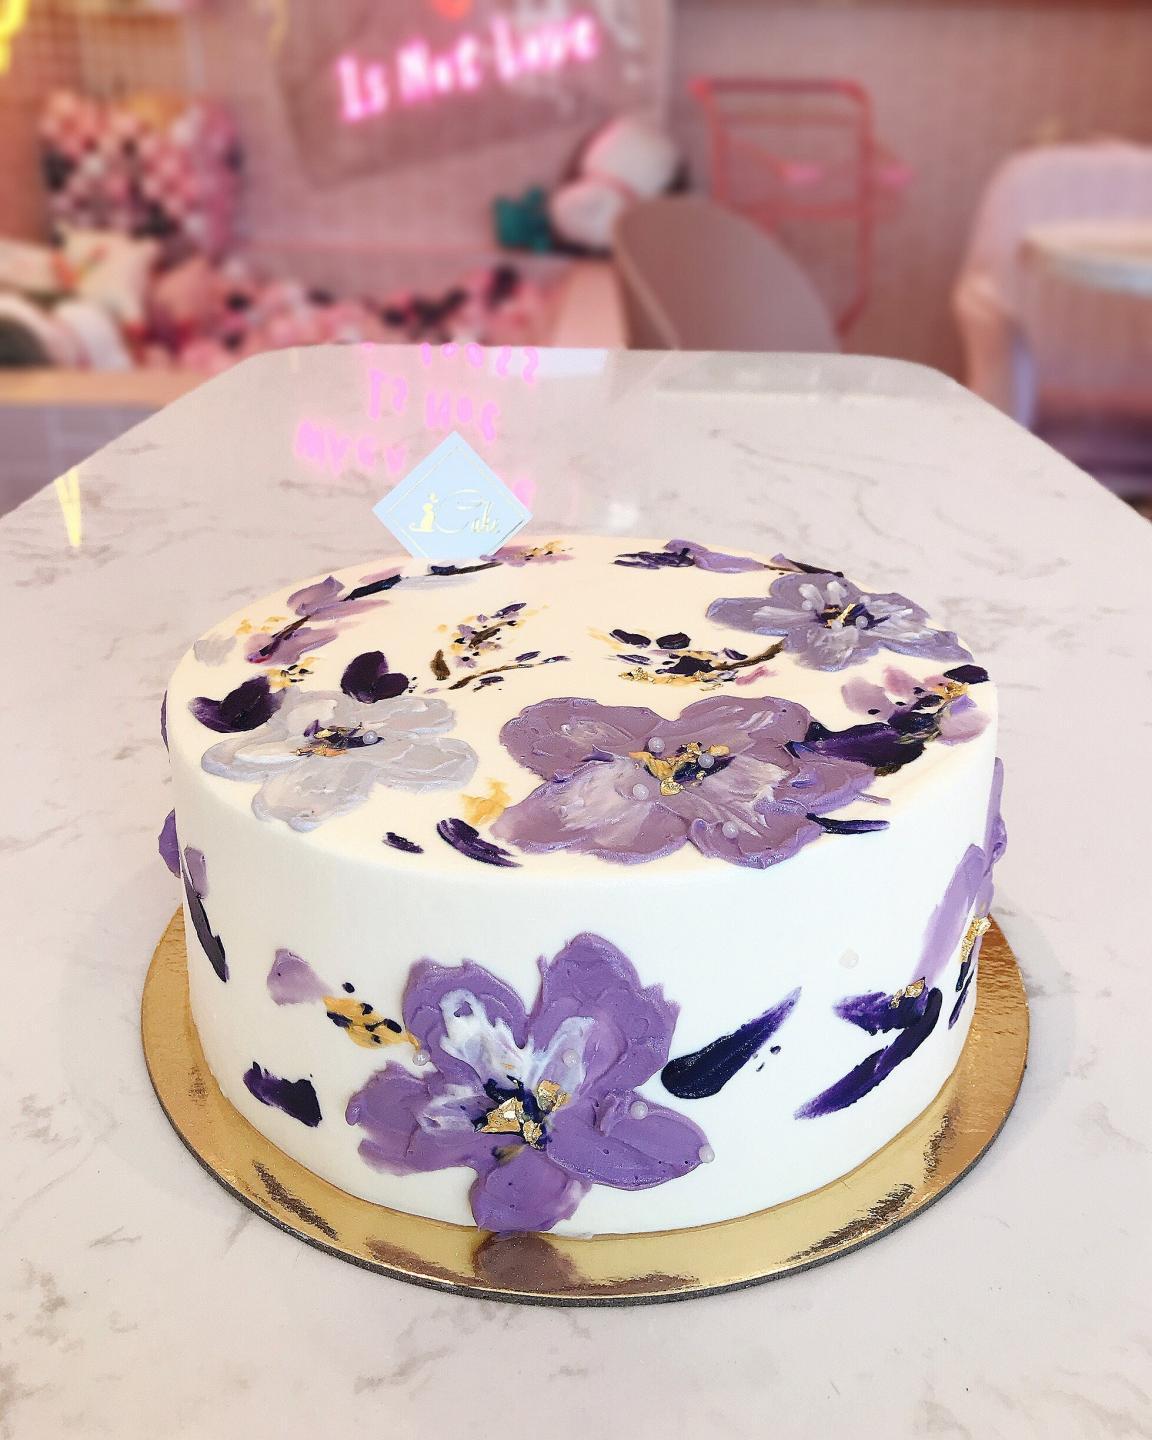 20 Purple Wedding Cake Ideas for a Striking Look